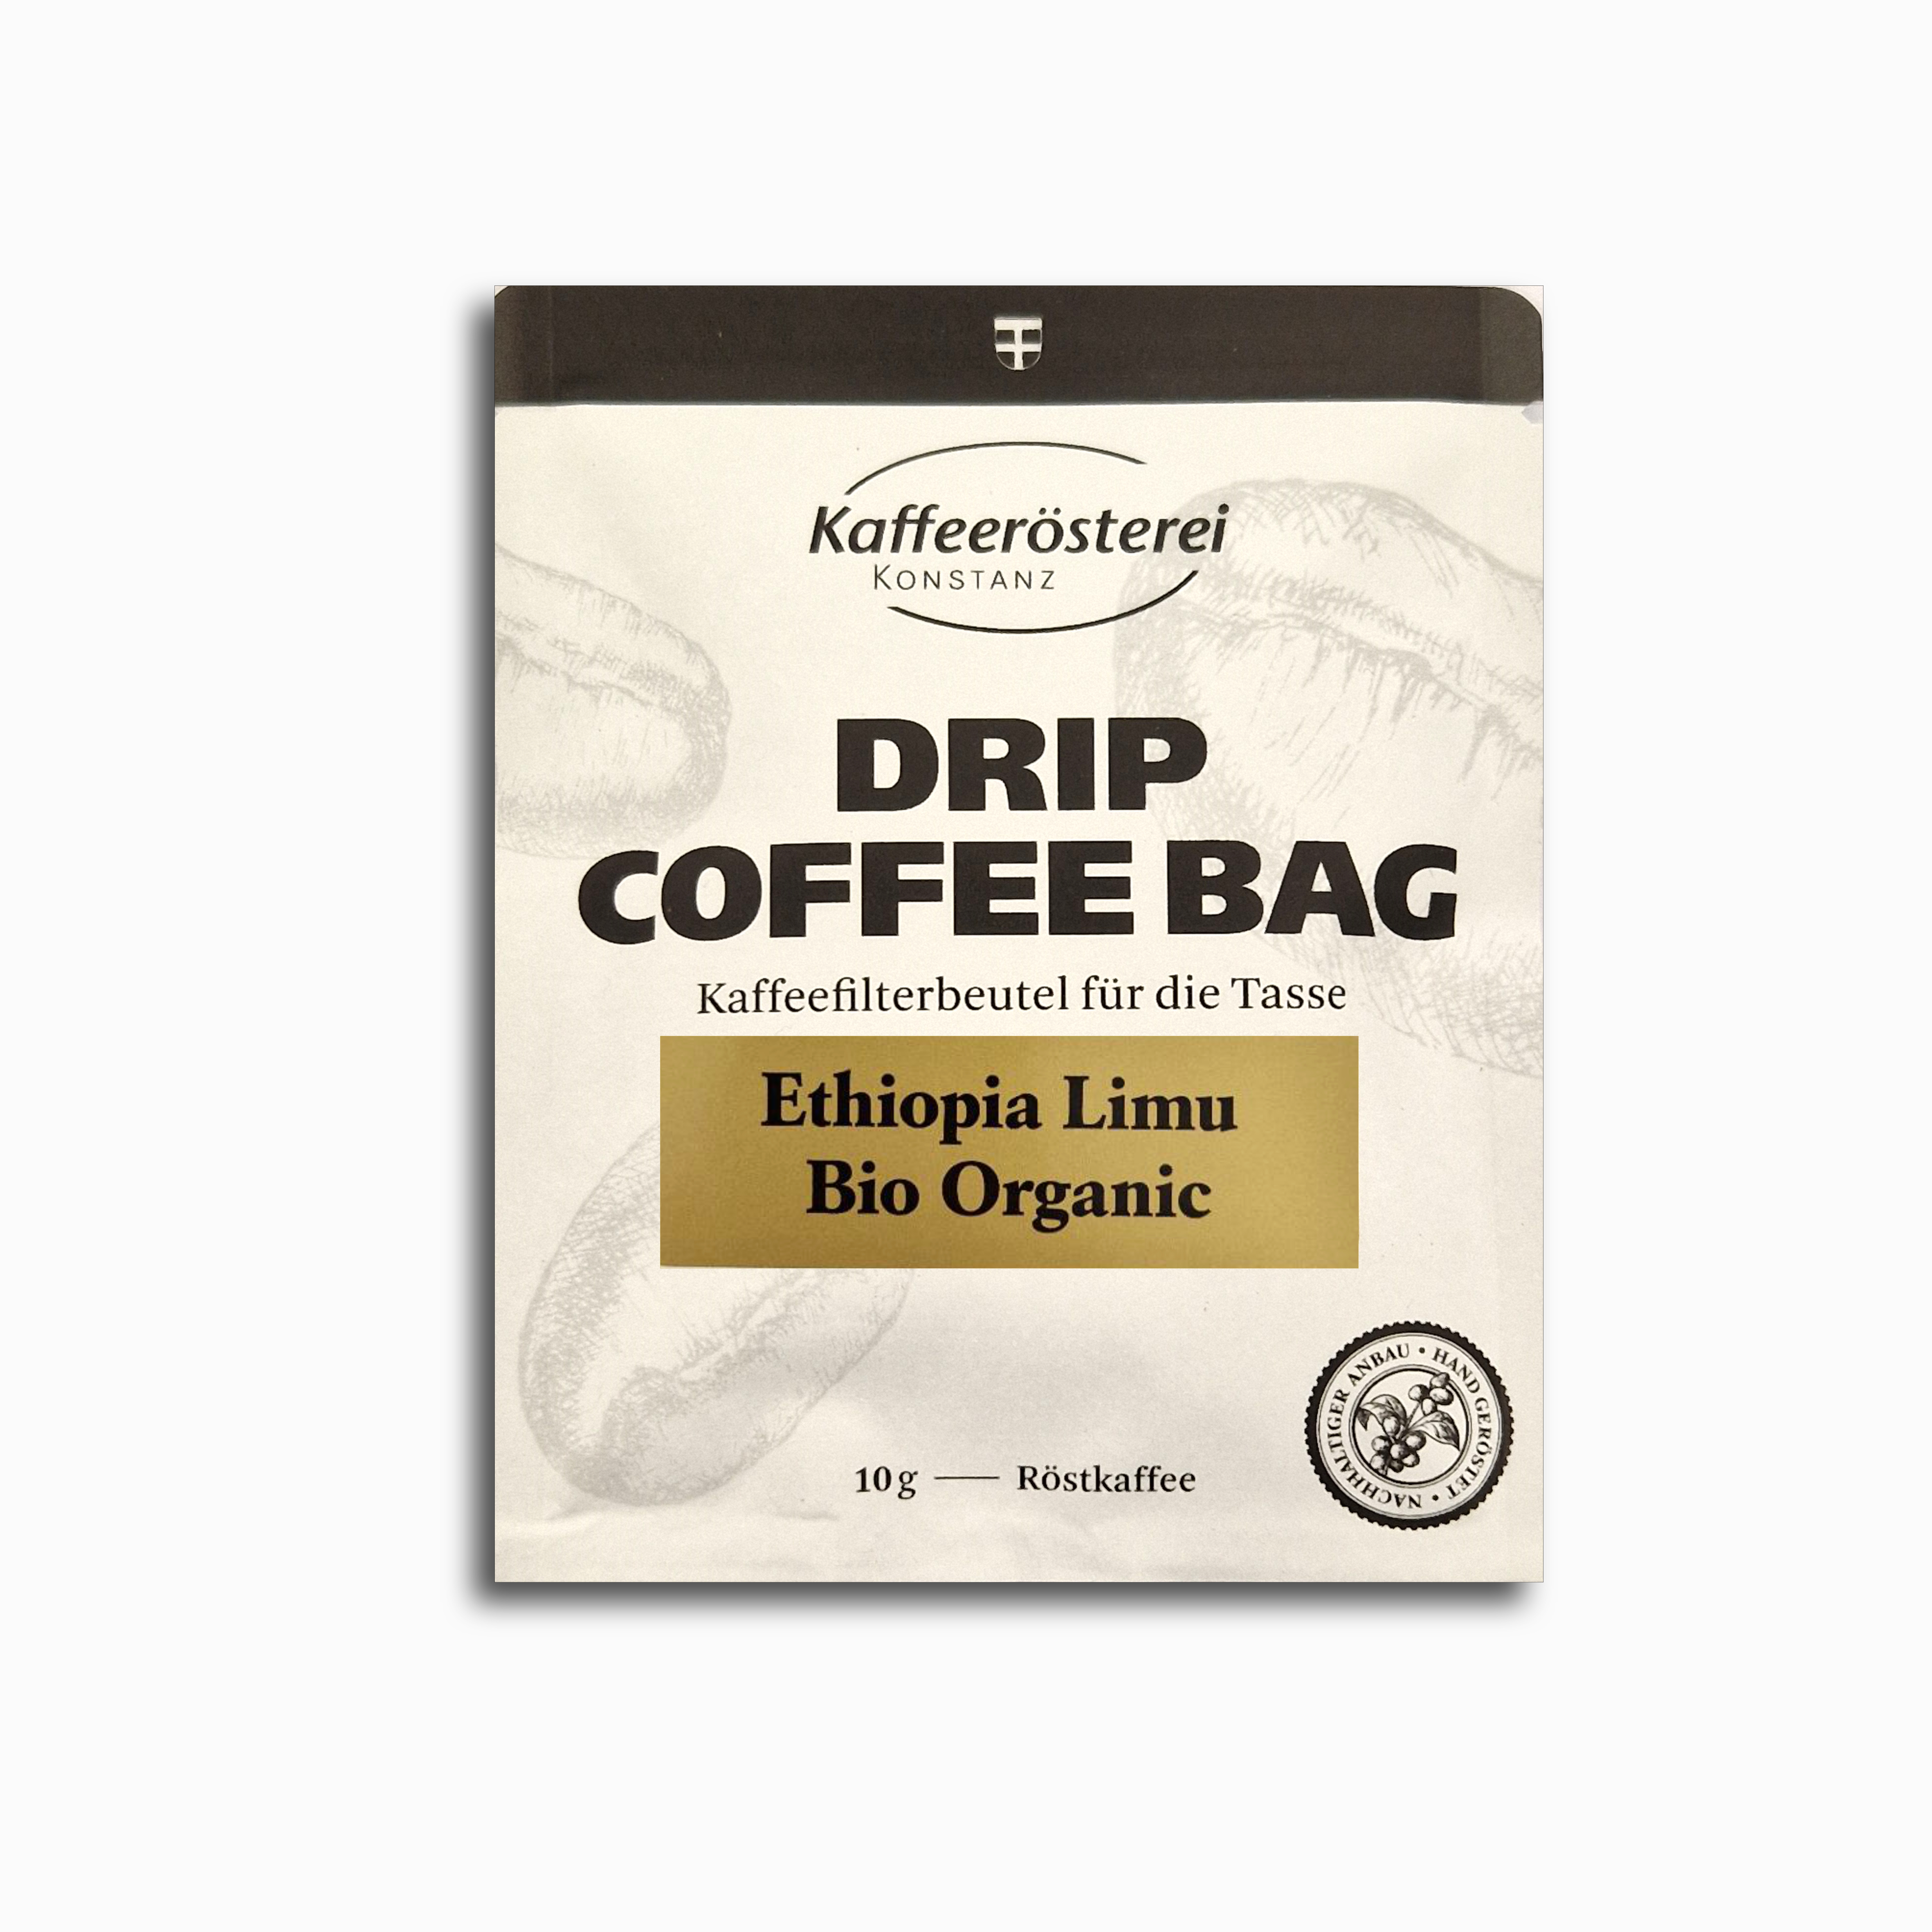 Drip Coffee Bag - Ethiopia Limu Bio Organic